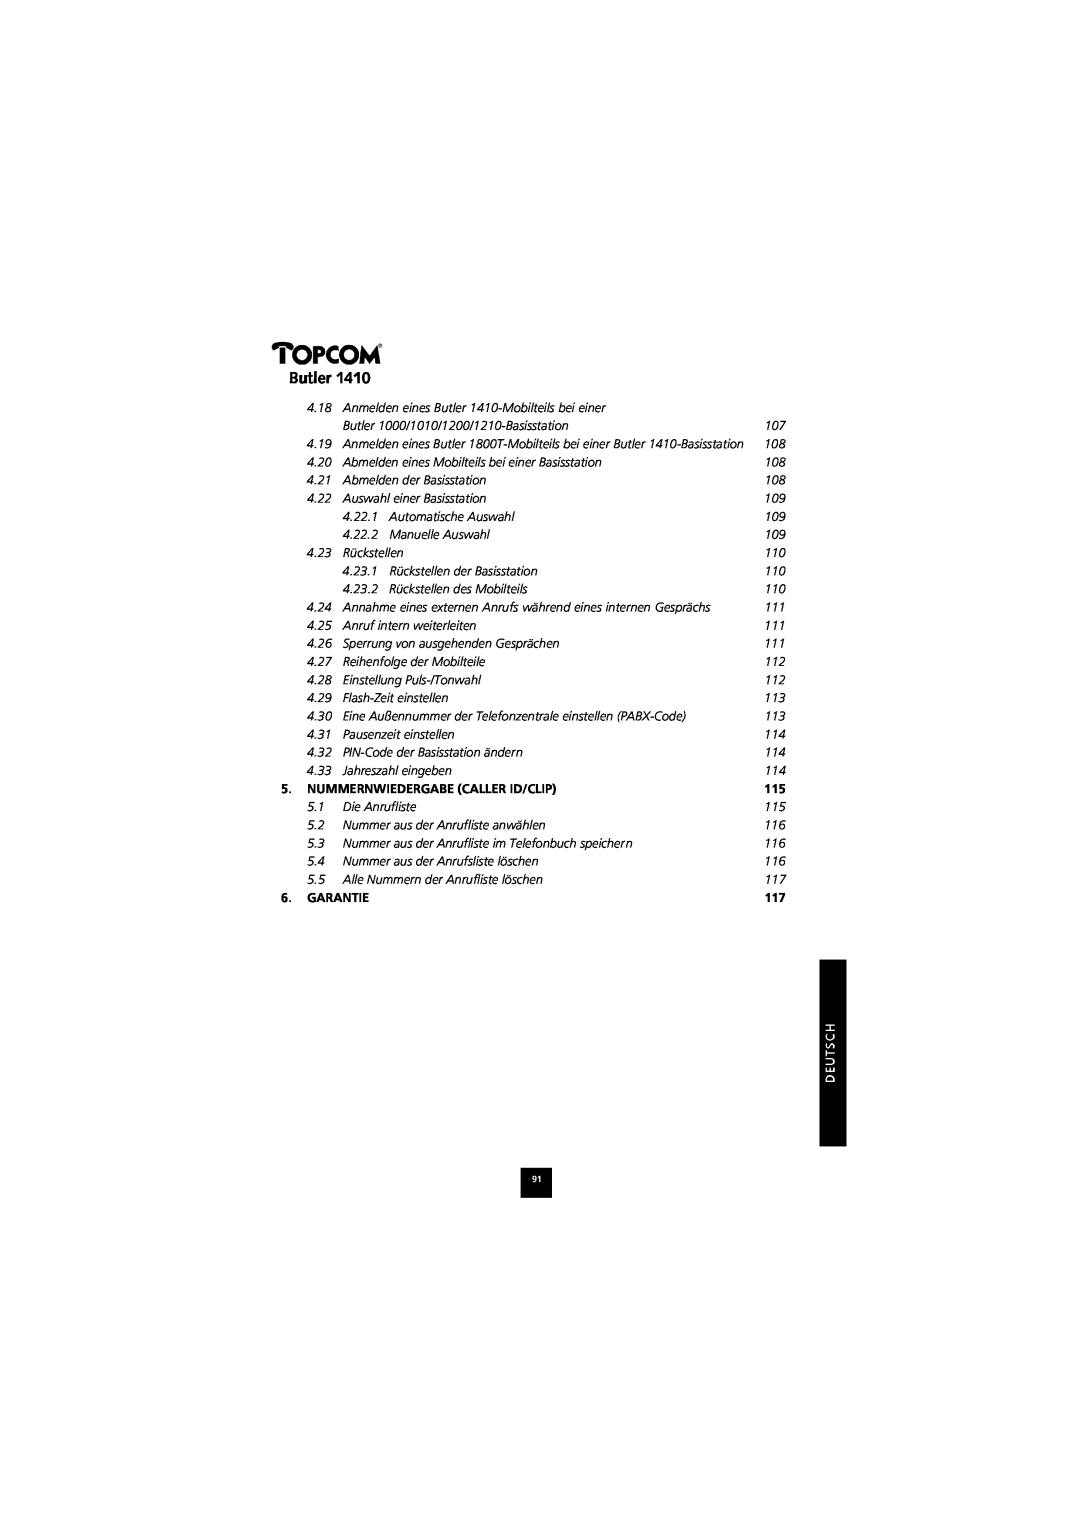 Topcom 1410 manual Butler, Nummernwiedergabe Caller Id/Clip, Garantie 